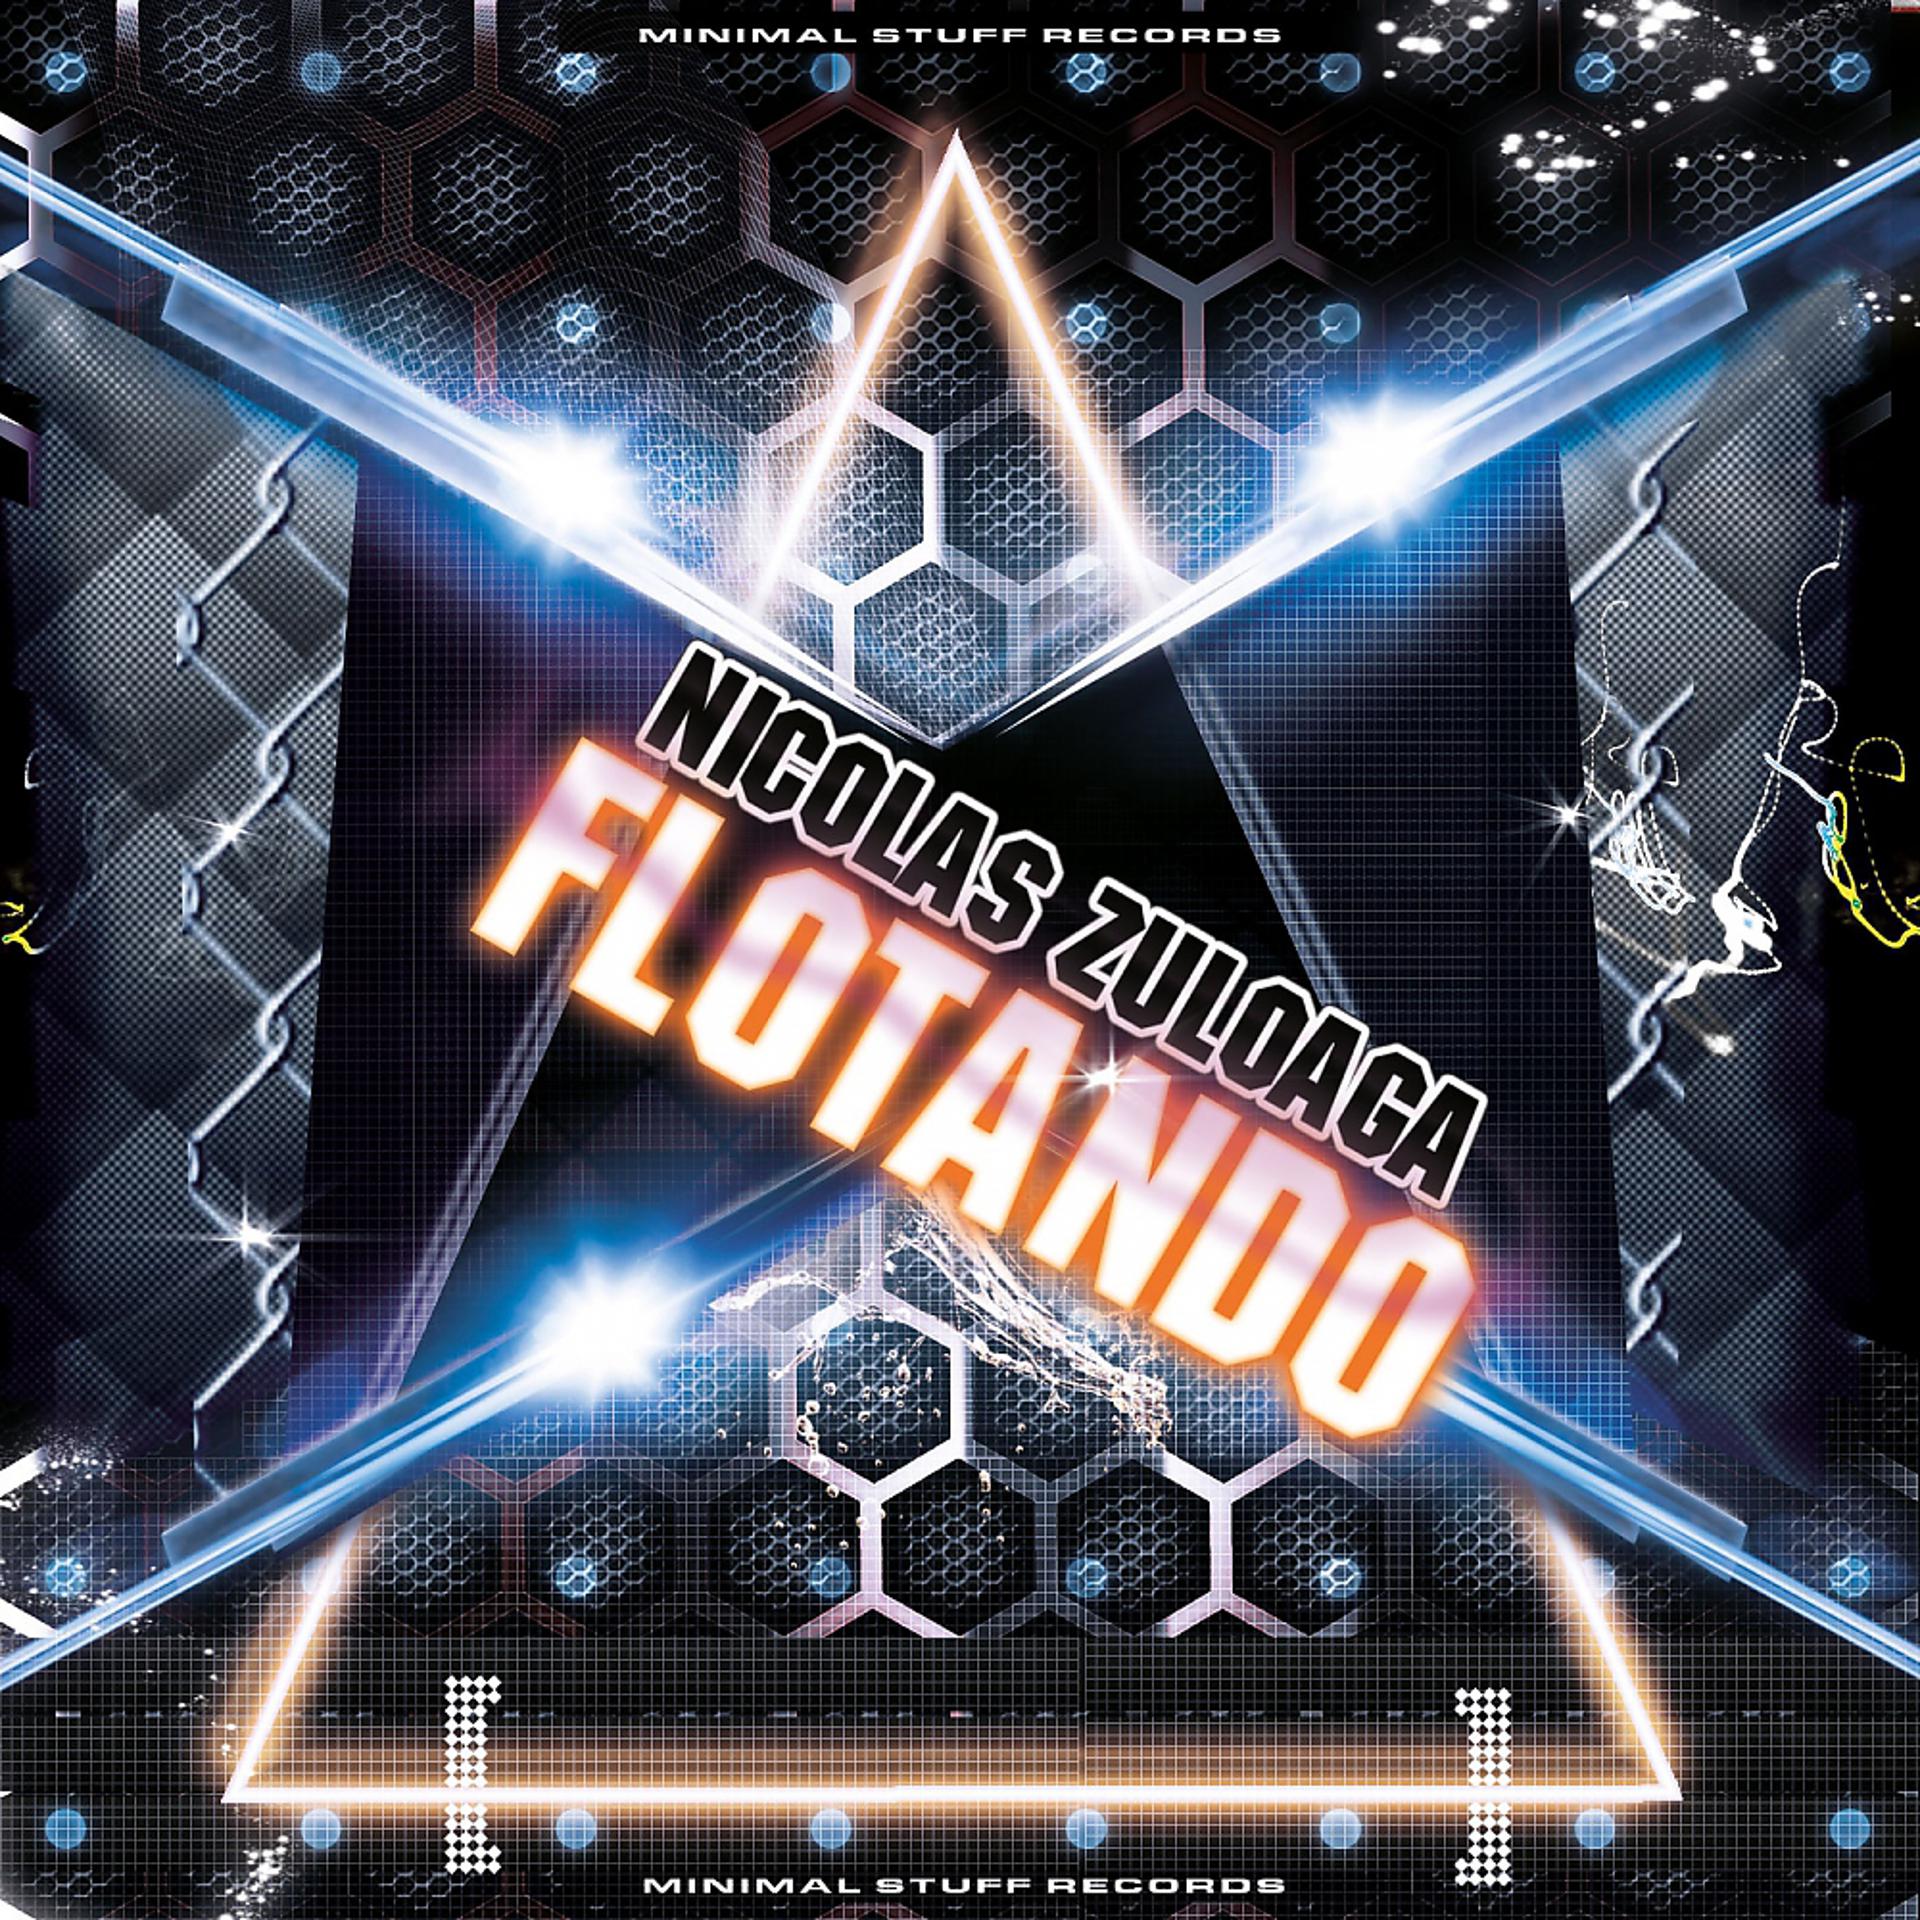 Постер альбома Flotando